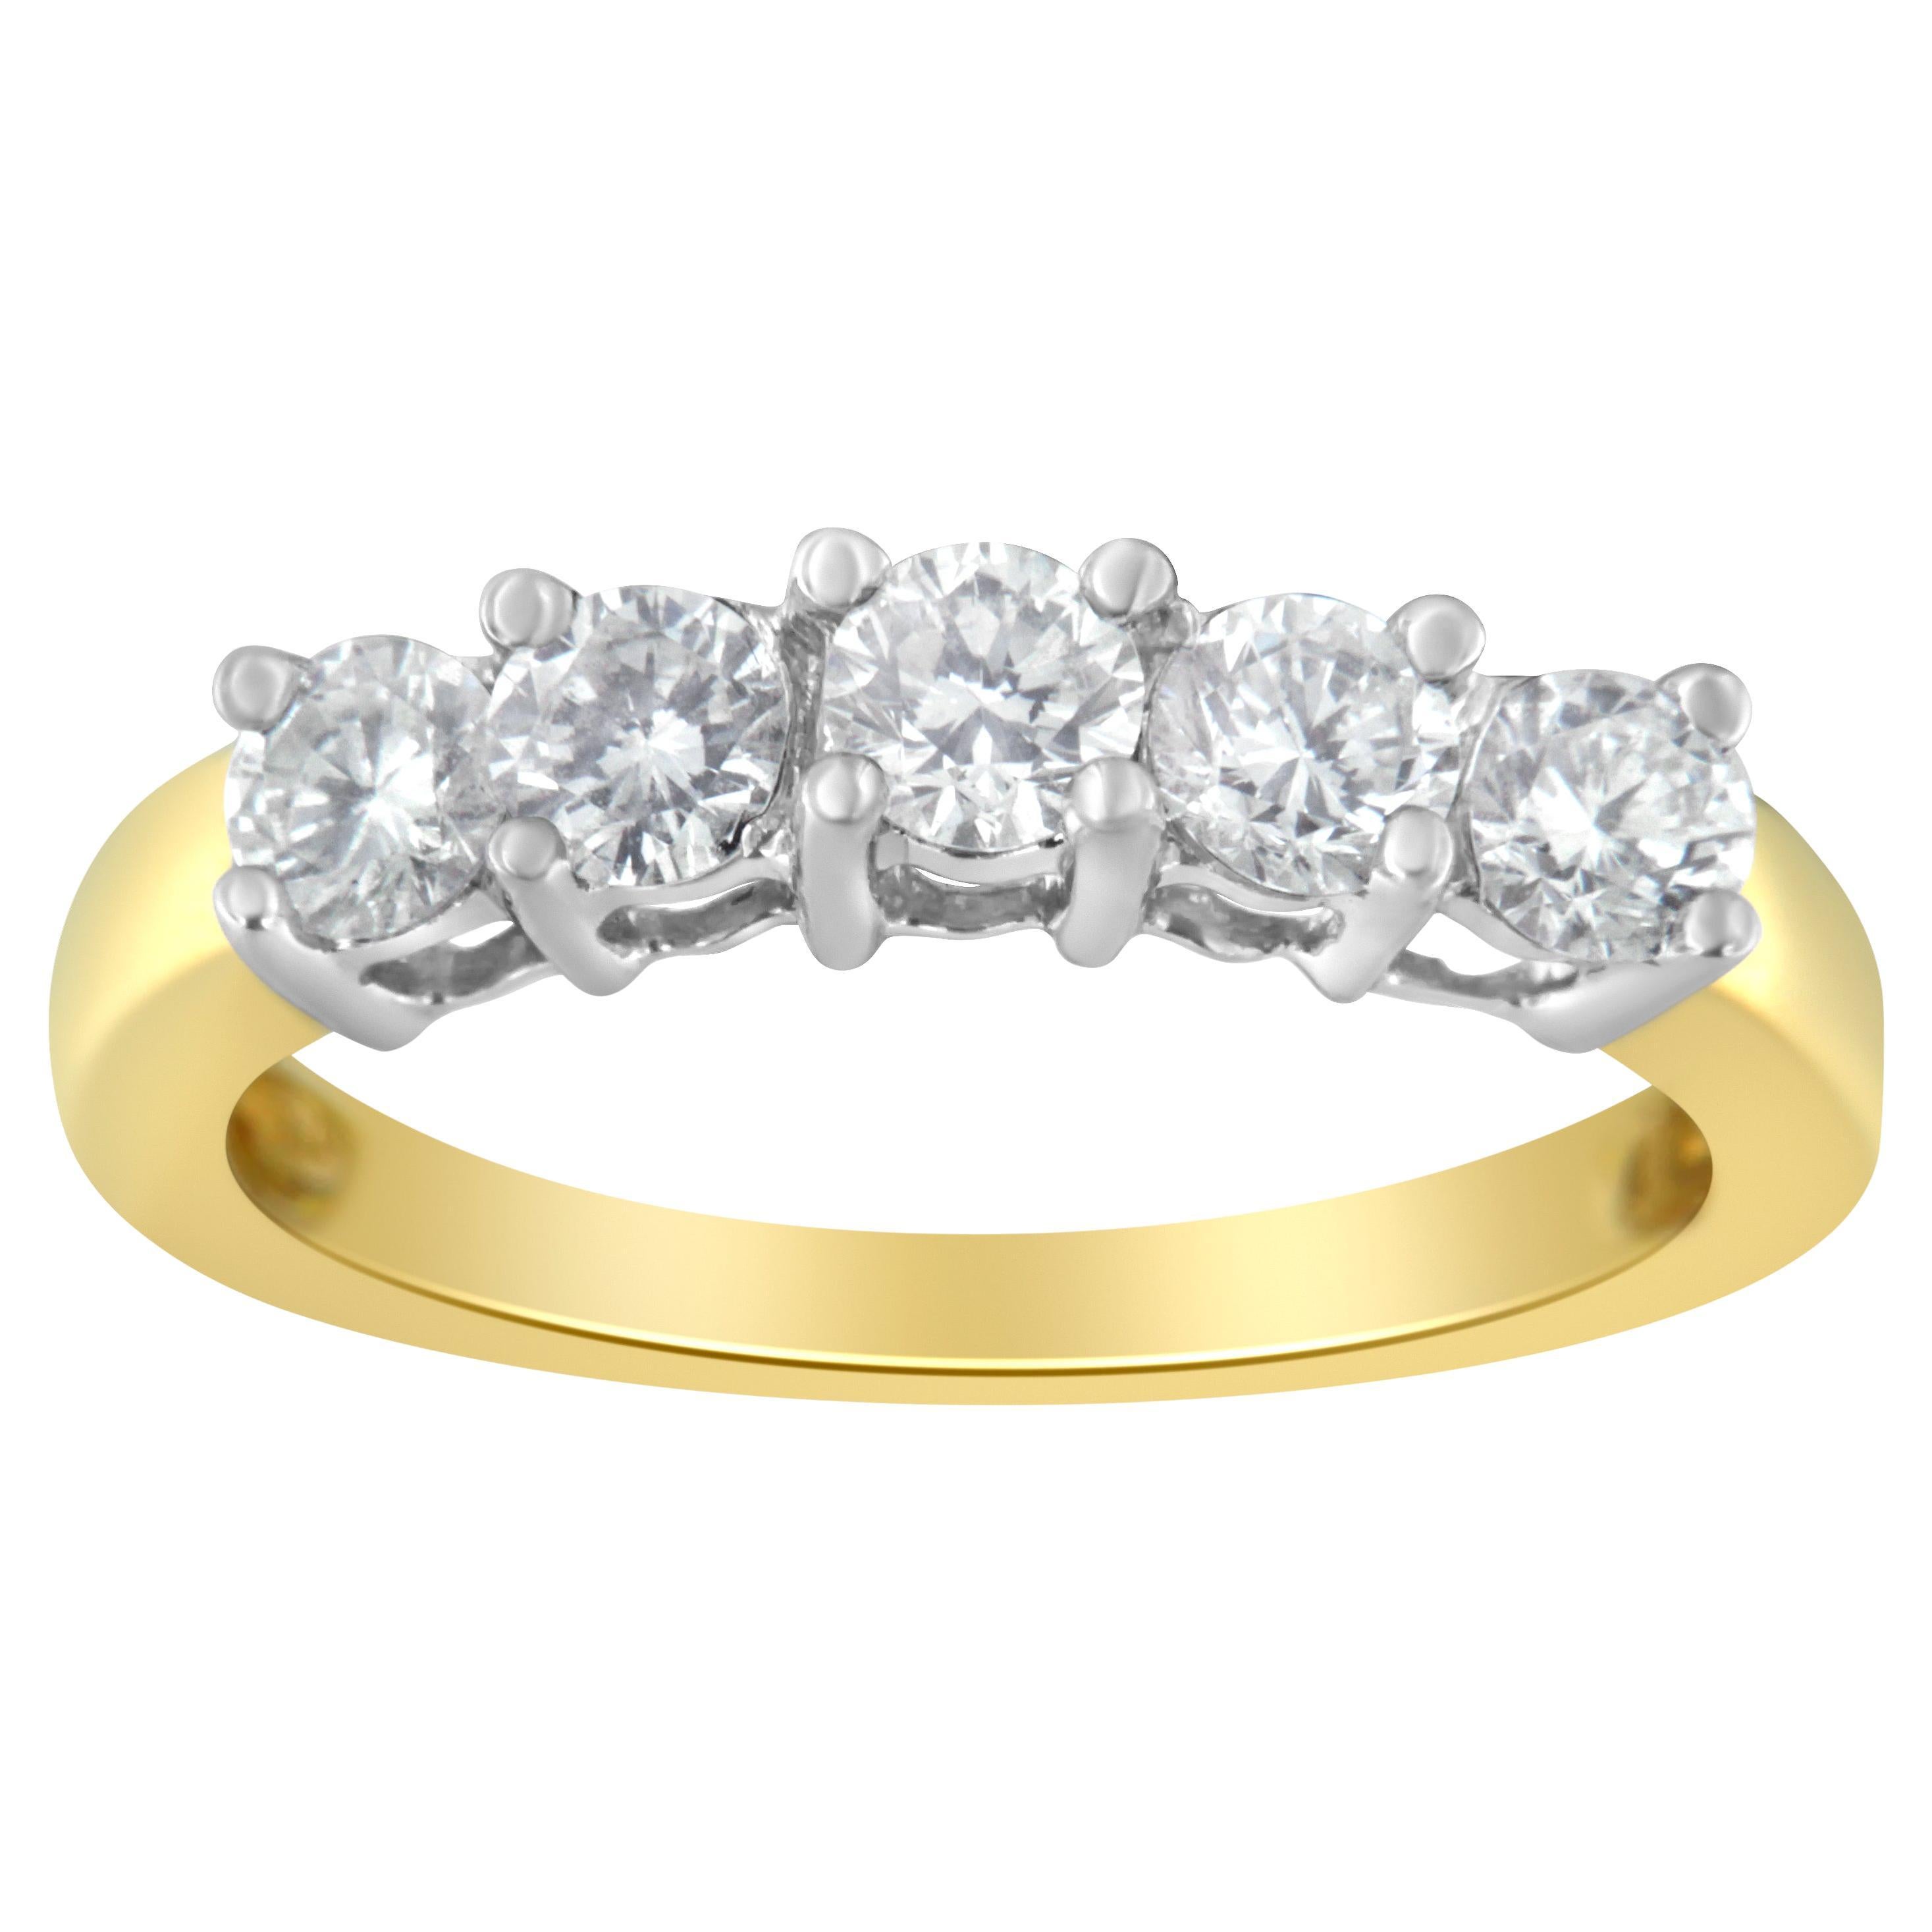 14K Two Toned Gold 1.0 Carat 5 Stone Diamond Ring